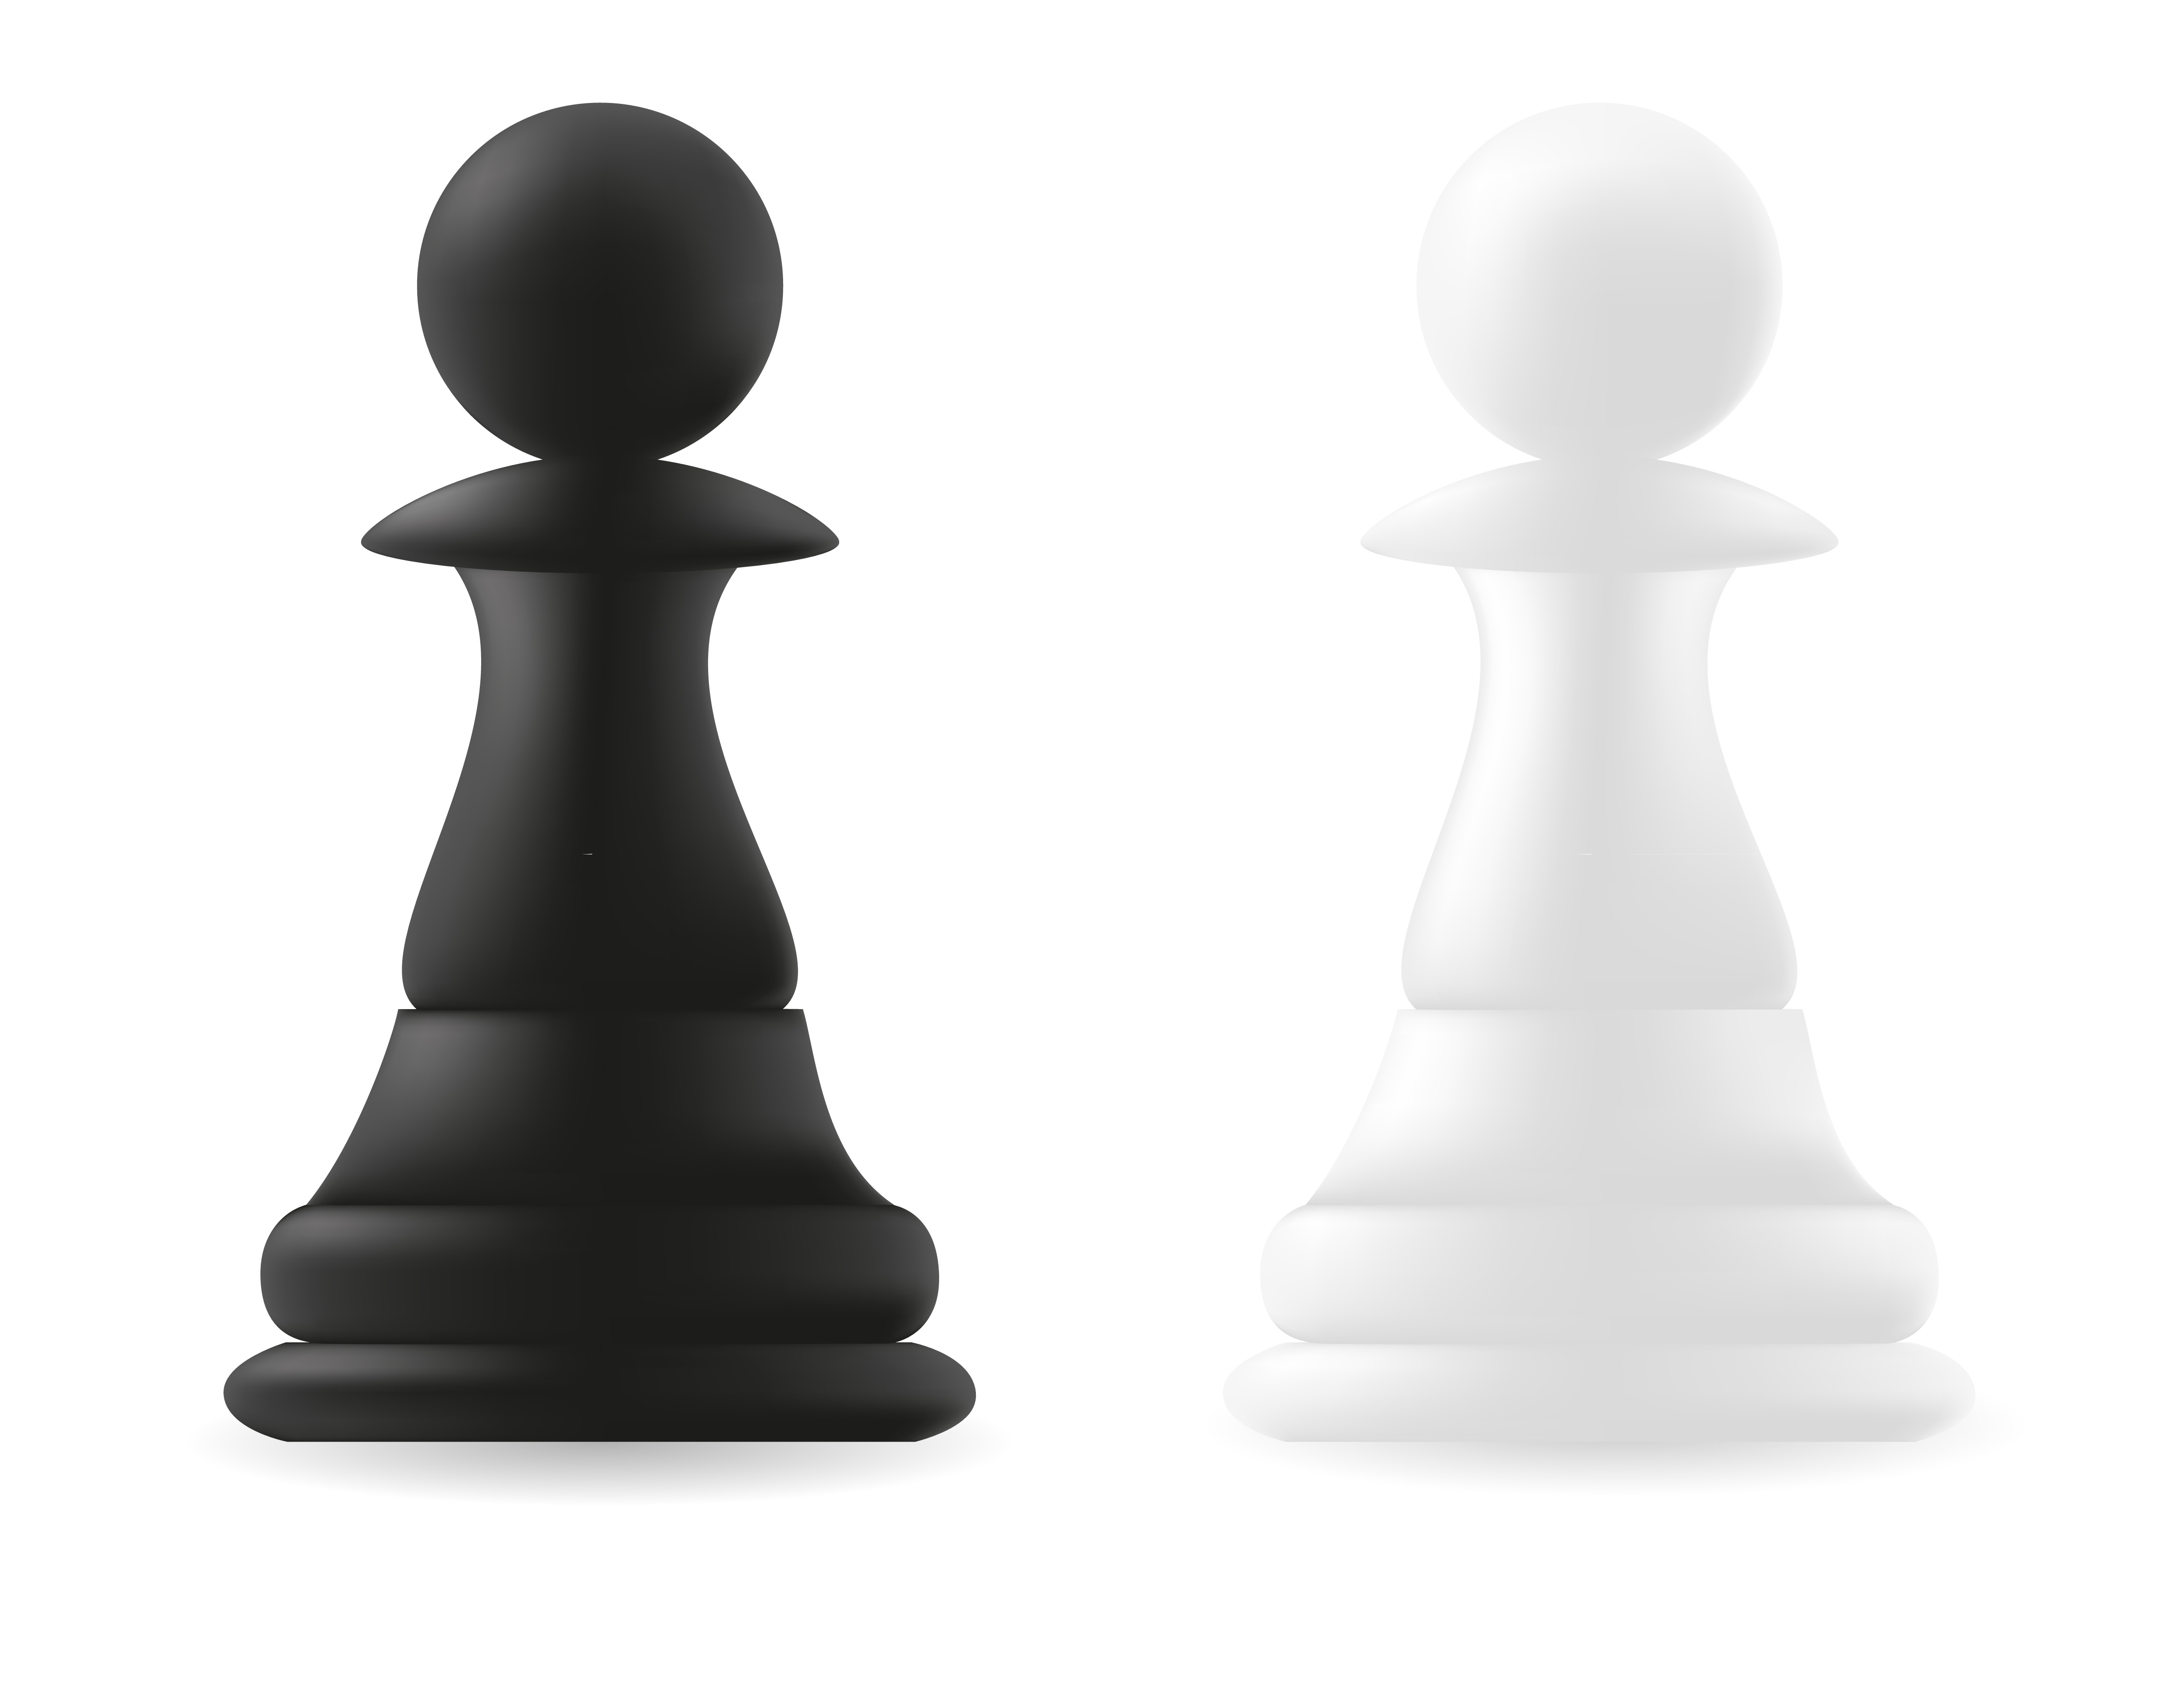 peão peça de xadrez preto e branco 516445 Vetor no Vecteezy